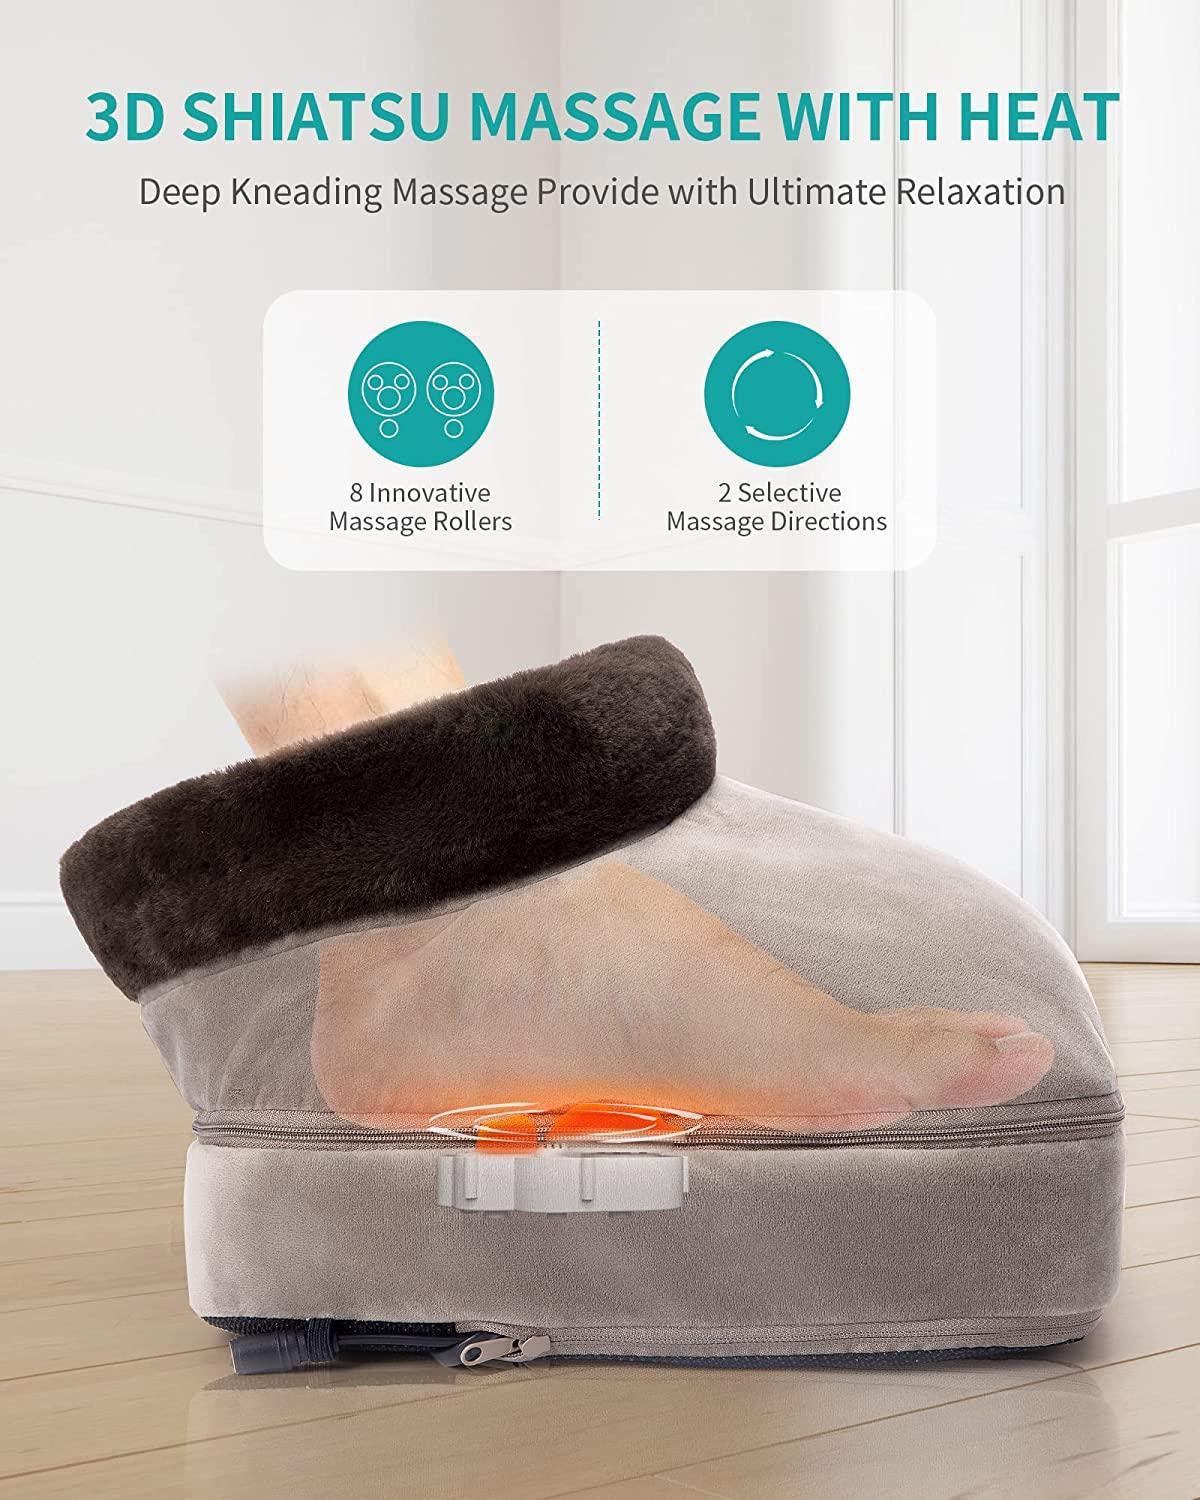 Nekteck Foot Massager Deep Kneading Shiatsu Therapy Massage with